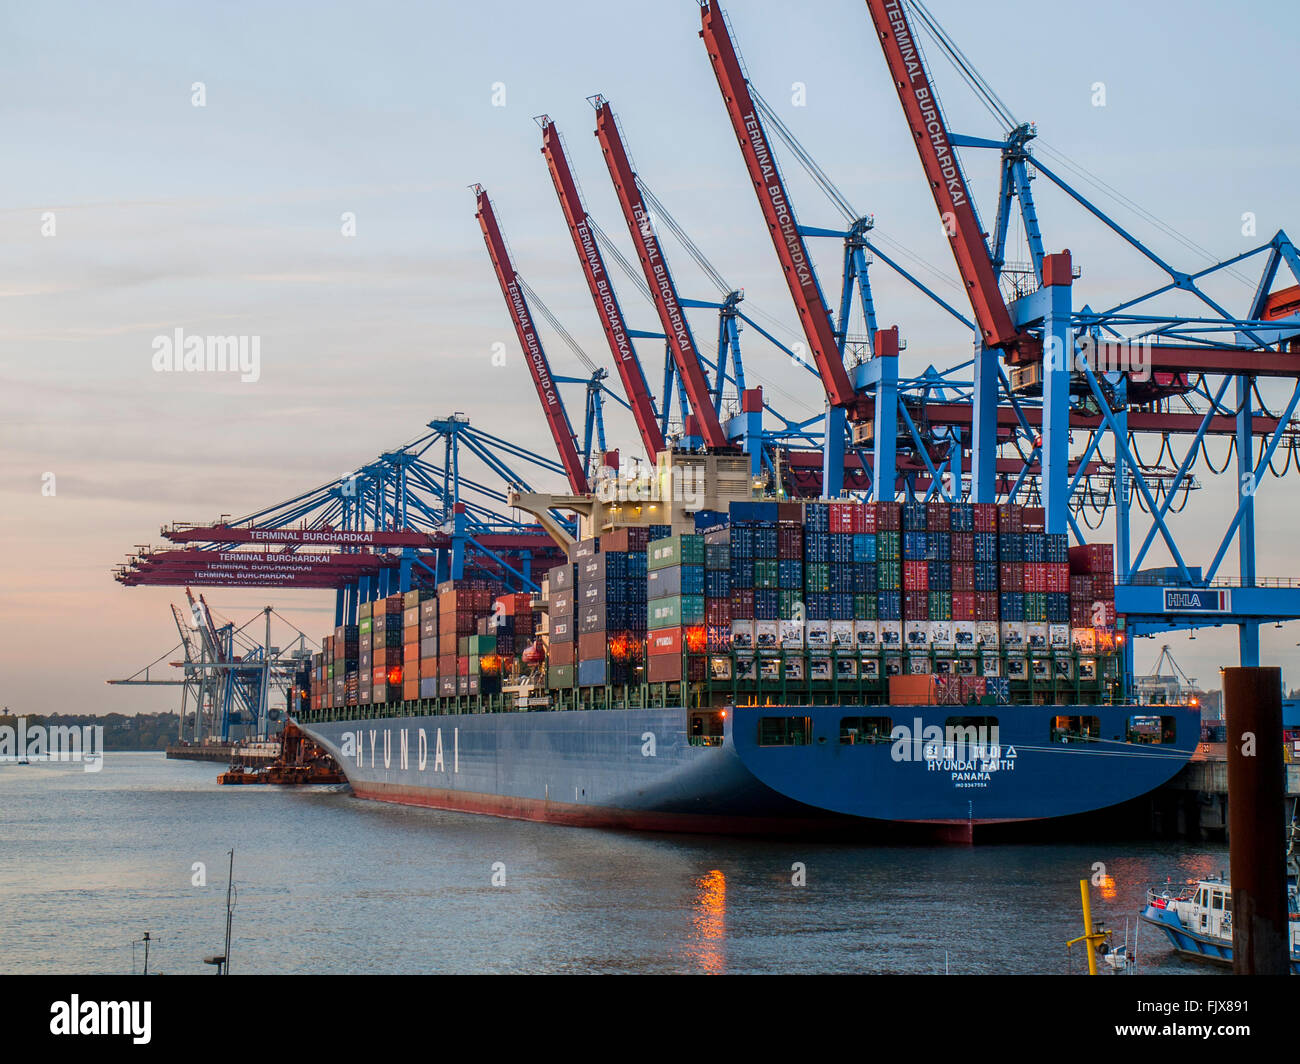 Containerschiff "Hyundai Faith" festgemacht am HHLA Burchardkai Container Terminal im Hamburger Hafen Stockfoto